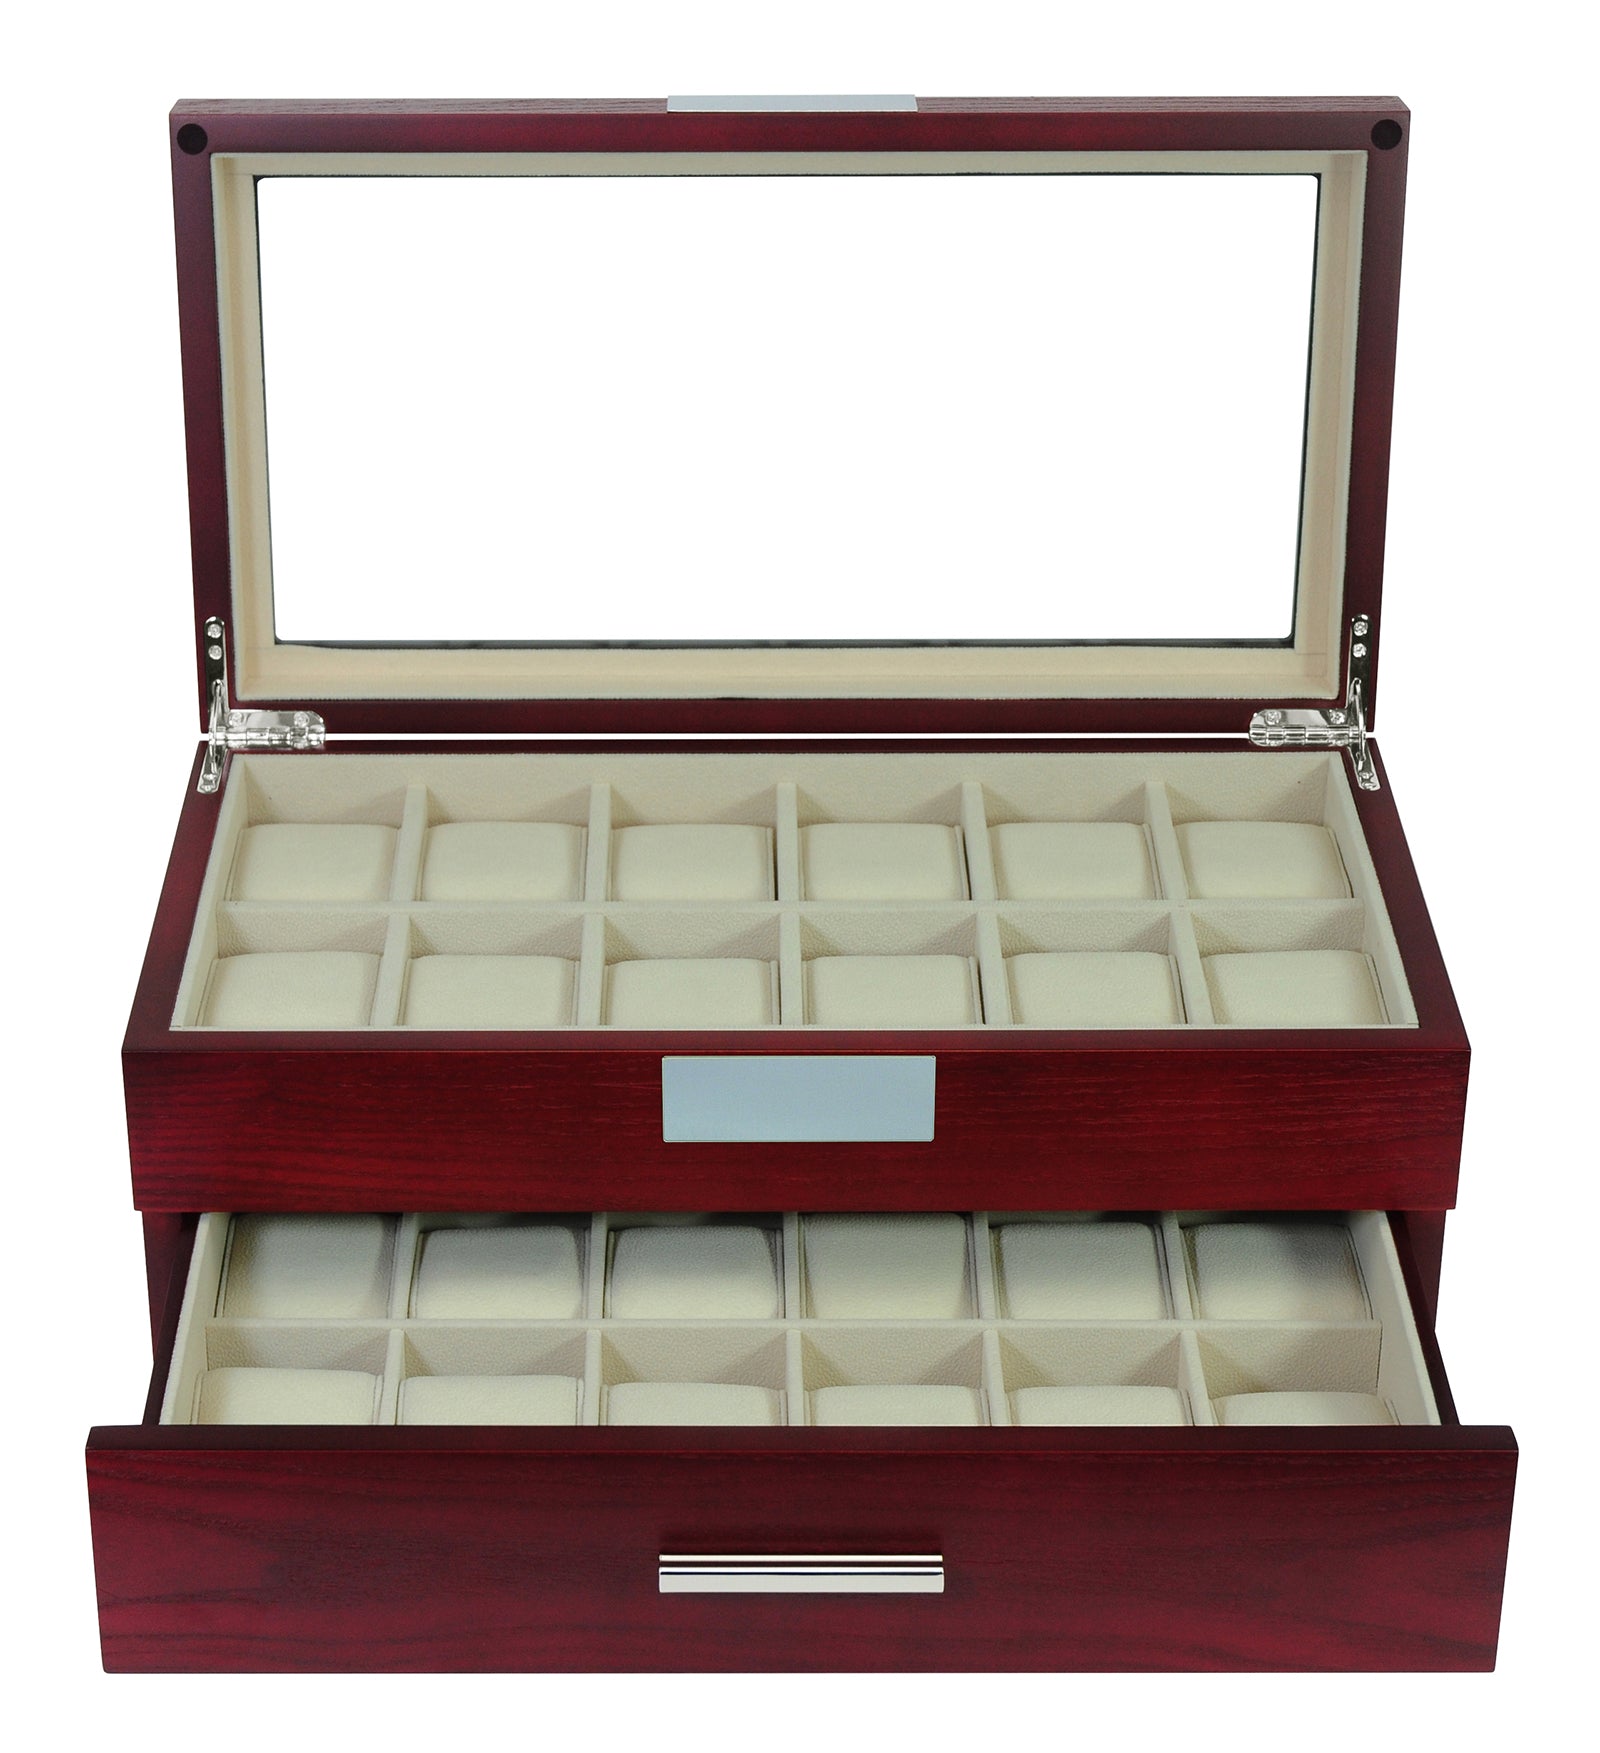 Valet Jewelry Box - Holds 6 Watches, 12 Cufflinks, 2 Sunglasses, Drawer & Tray Storage